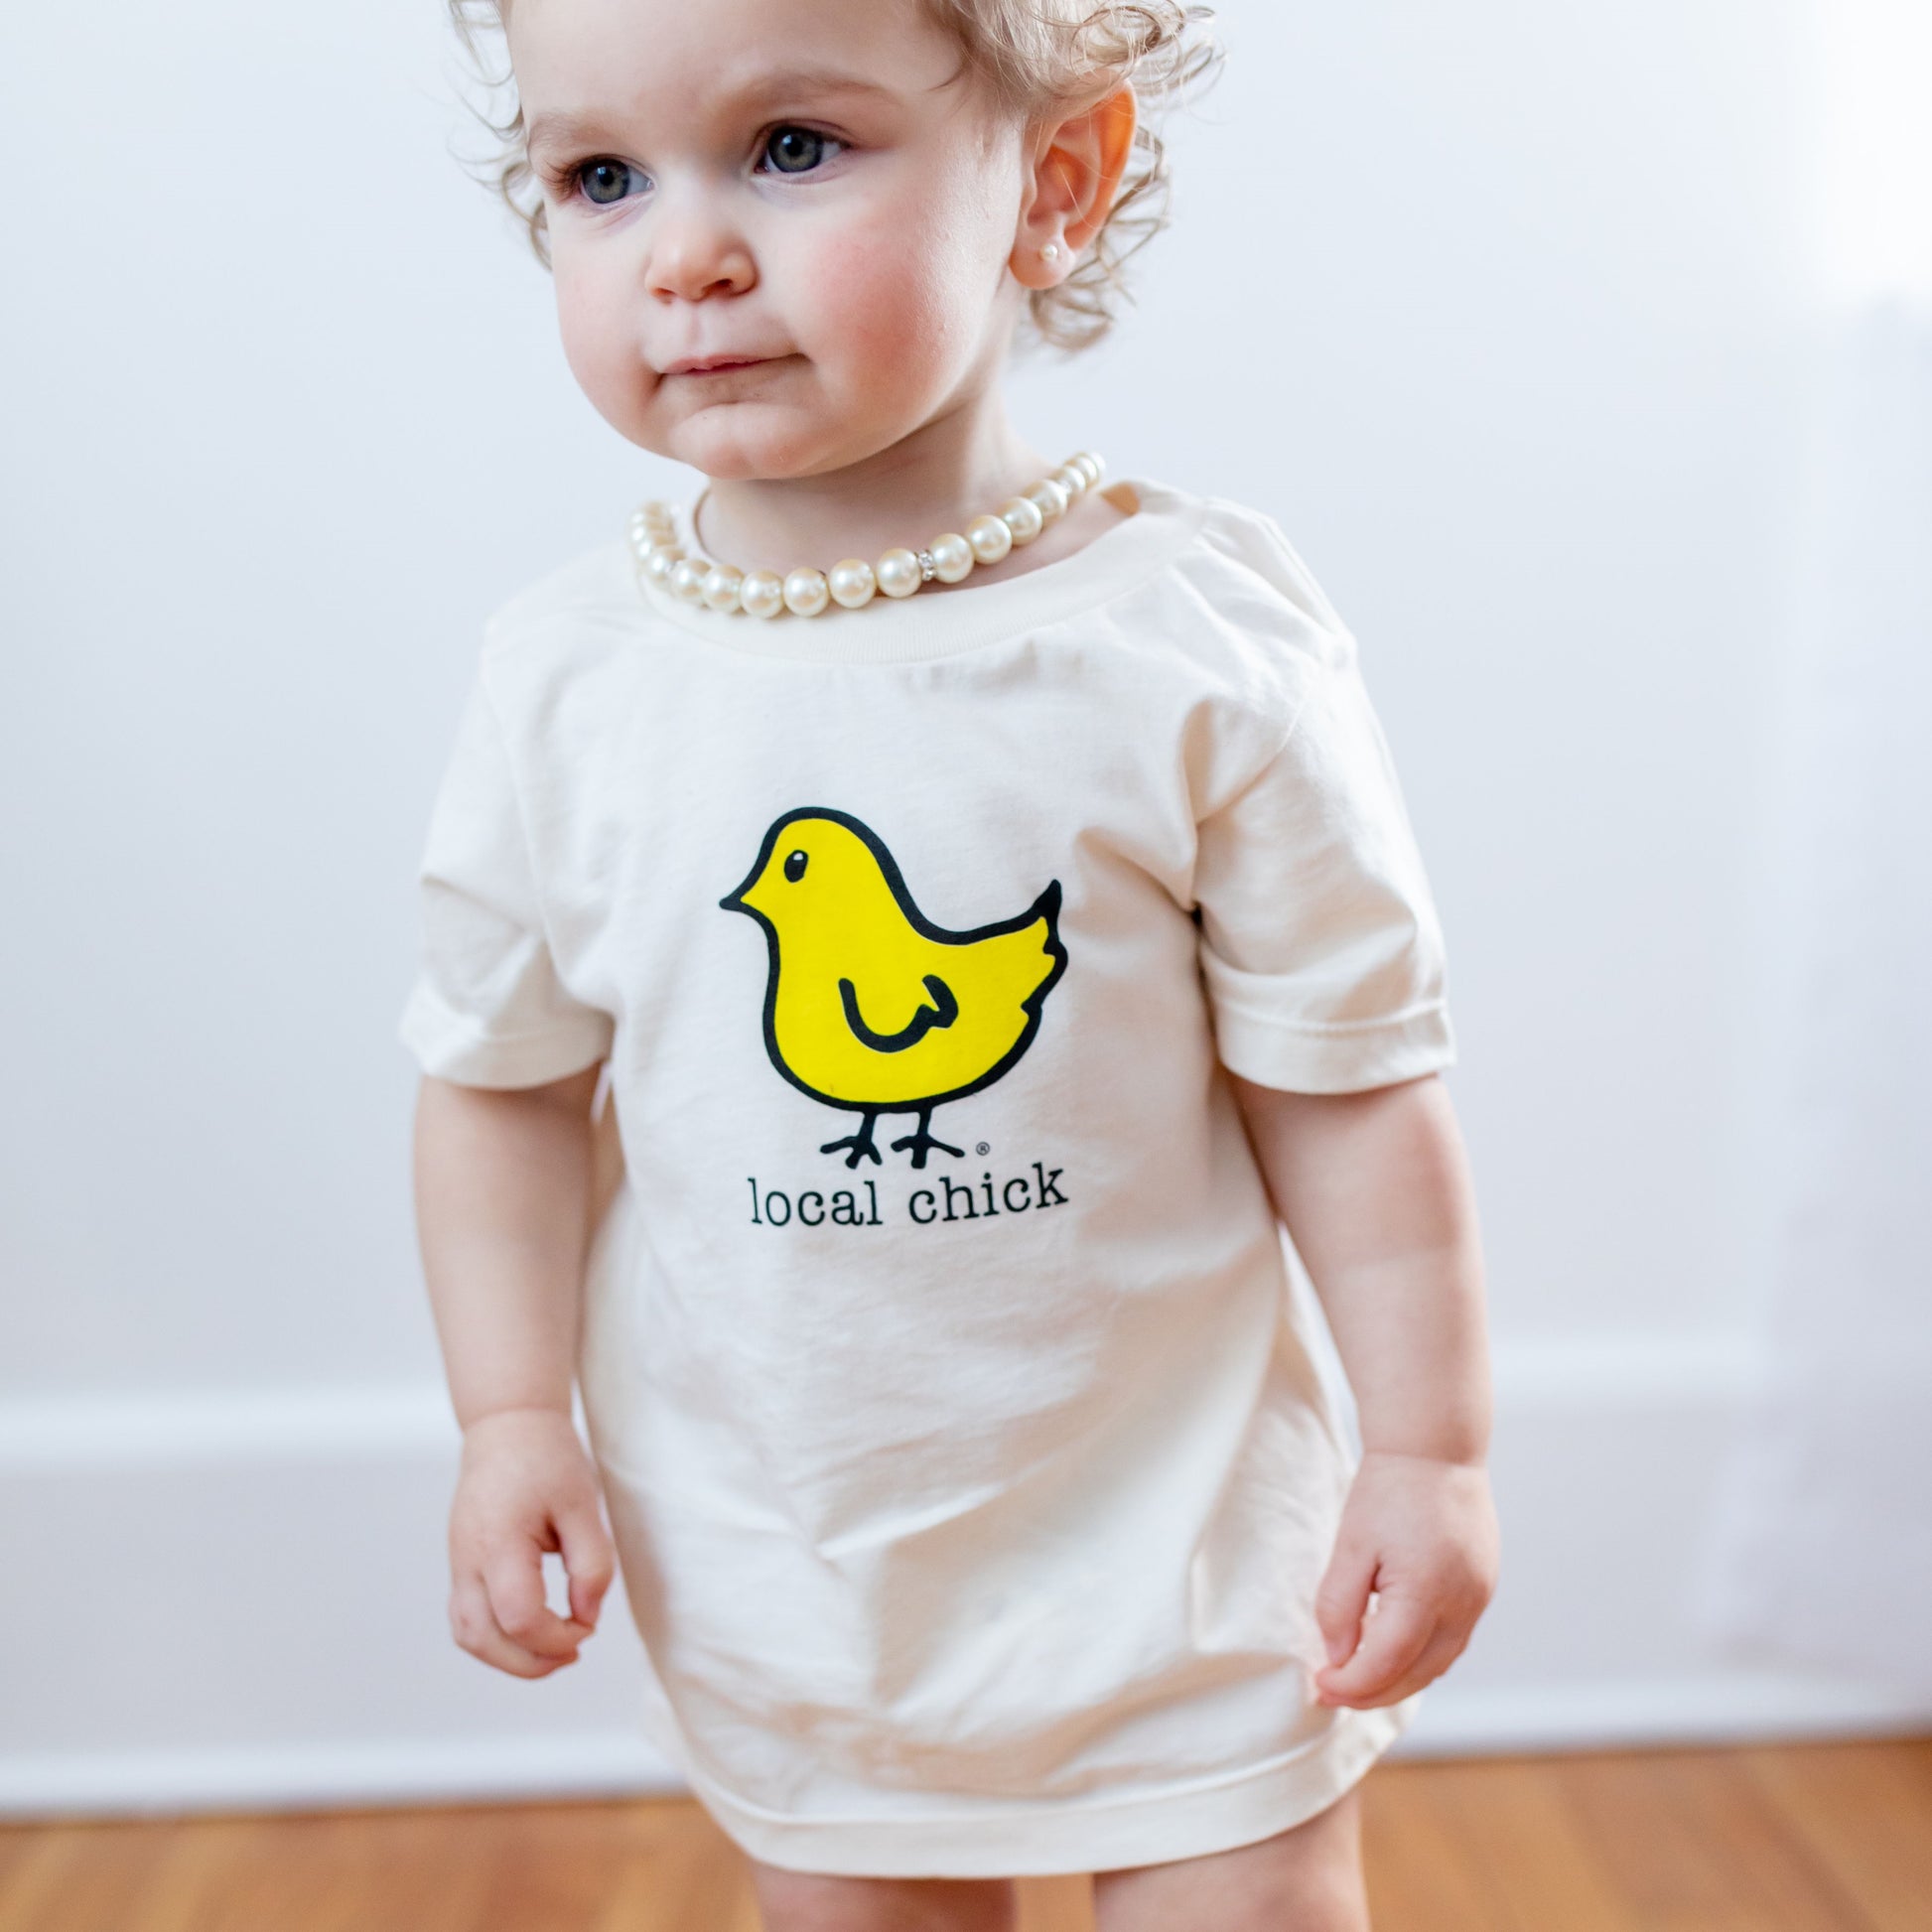 Organic cotton kids t-shirt - Yellow Chick - Simply Chickie